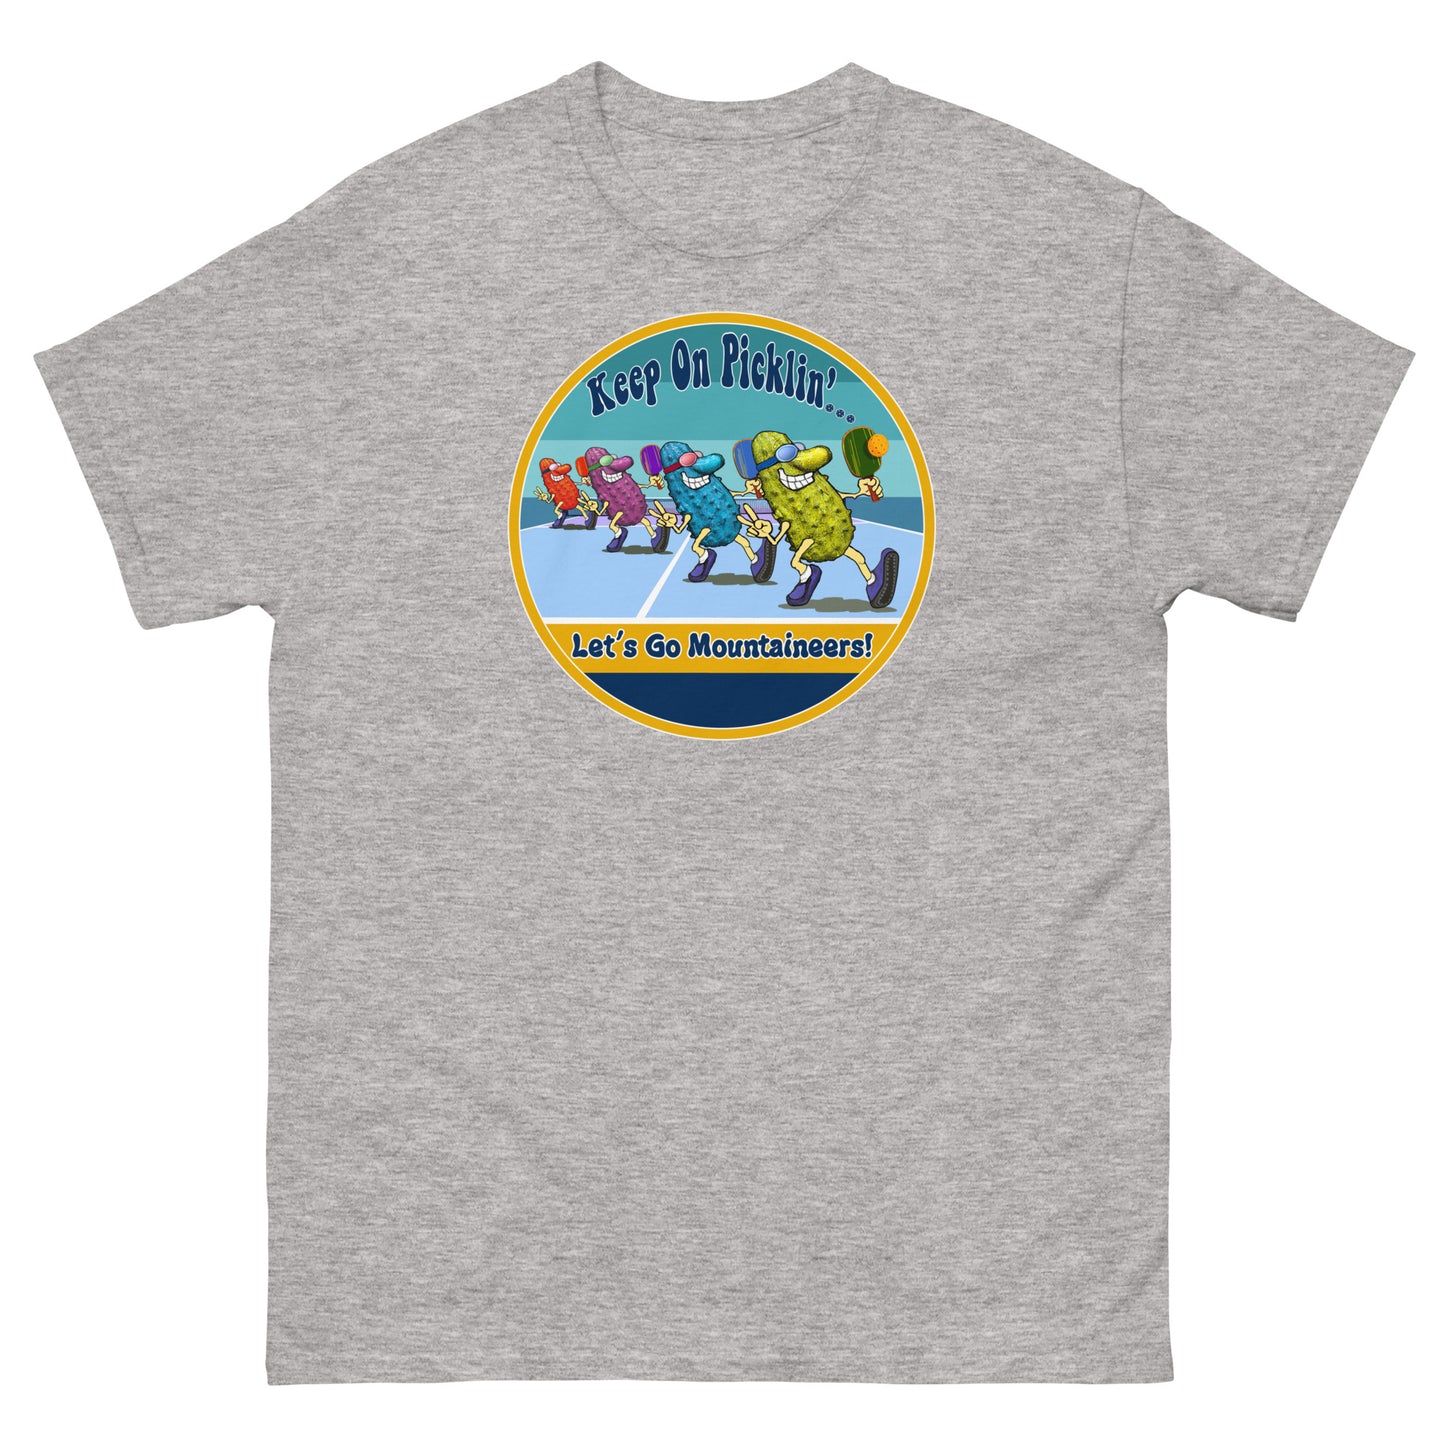 West Virginia Mountaineers Pickleball Shirt, Short-sleeve Tee, Retro Stripes Graphic